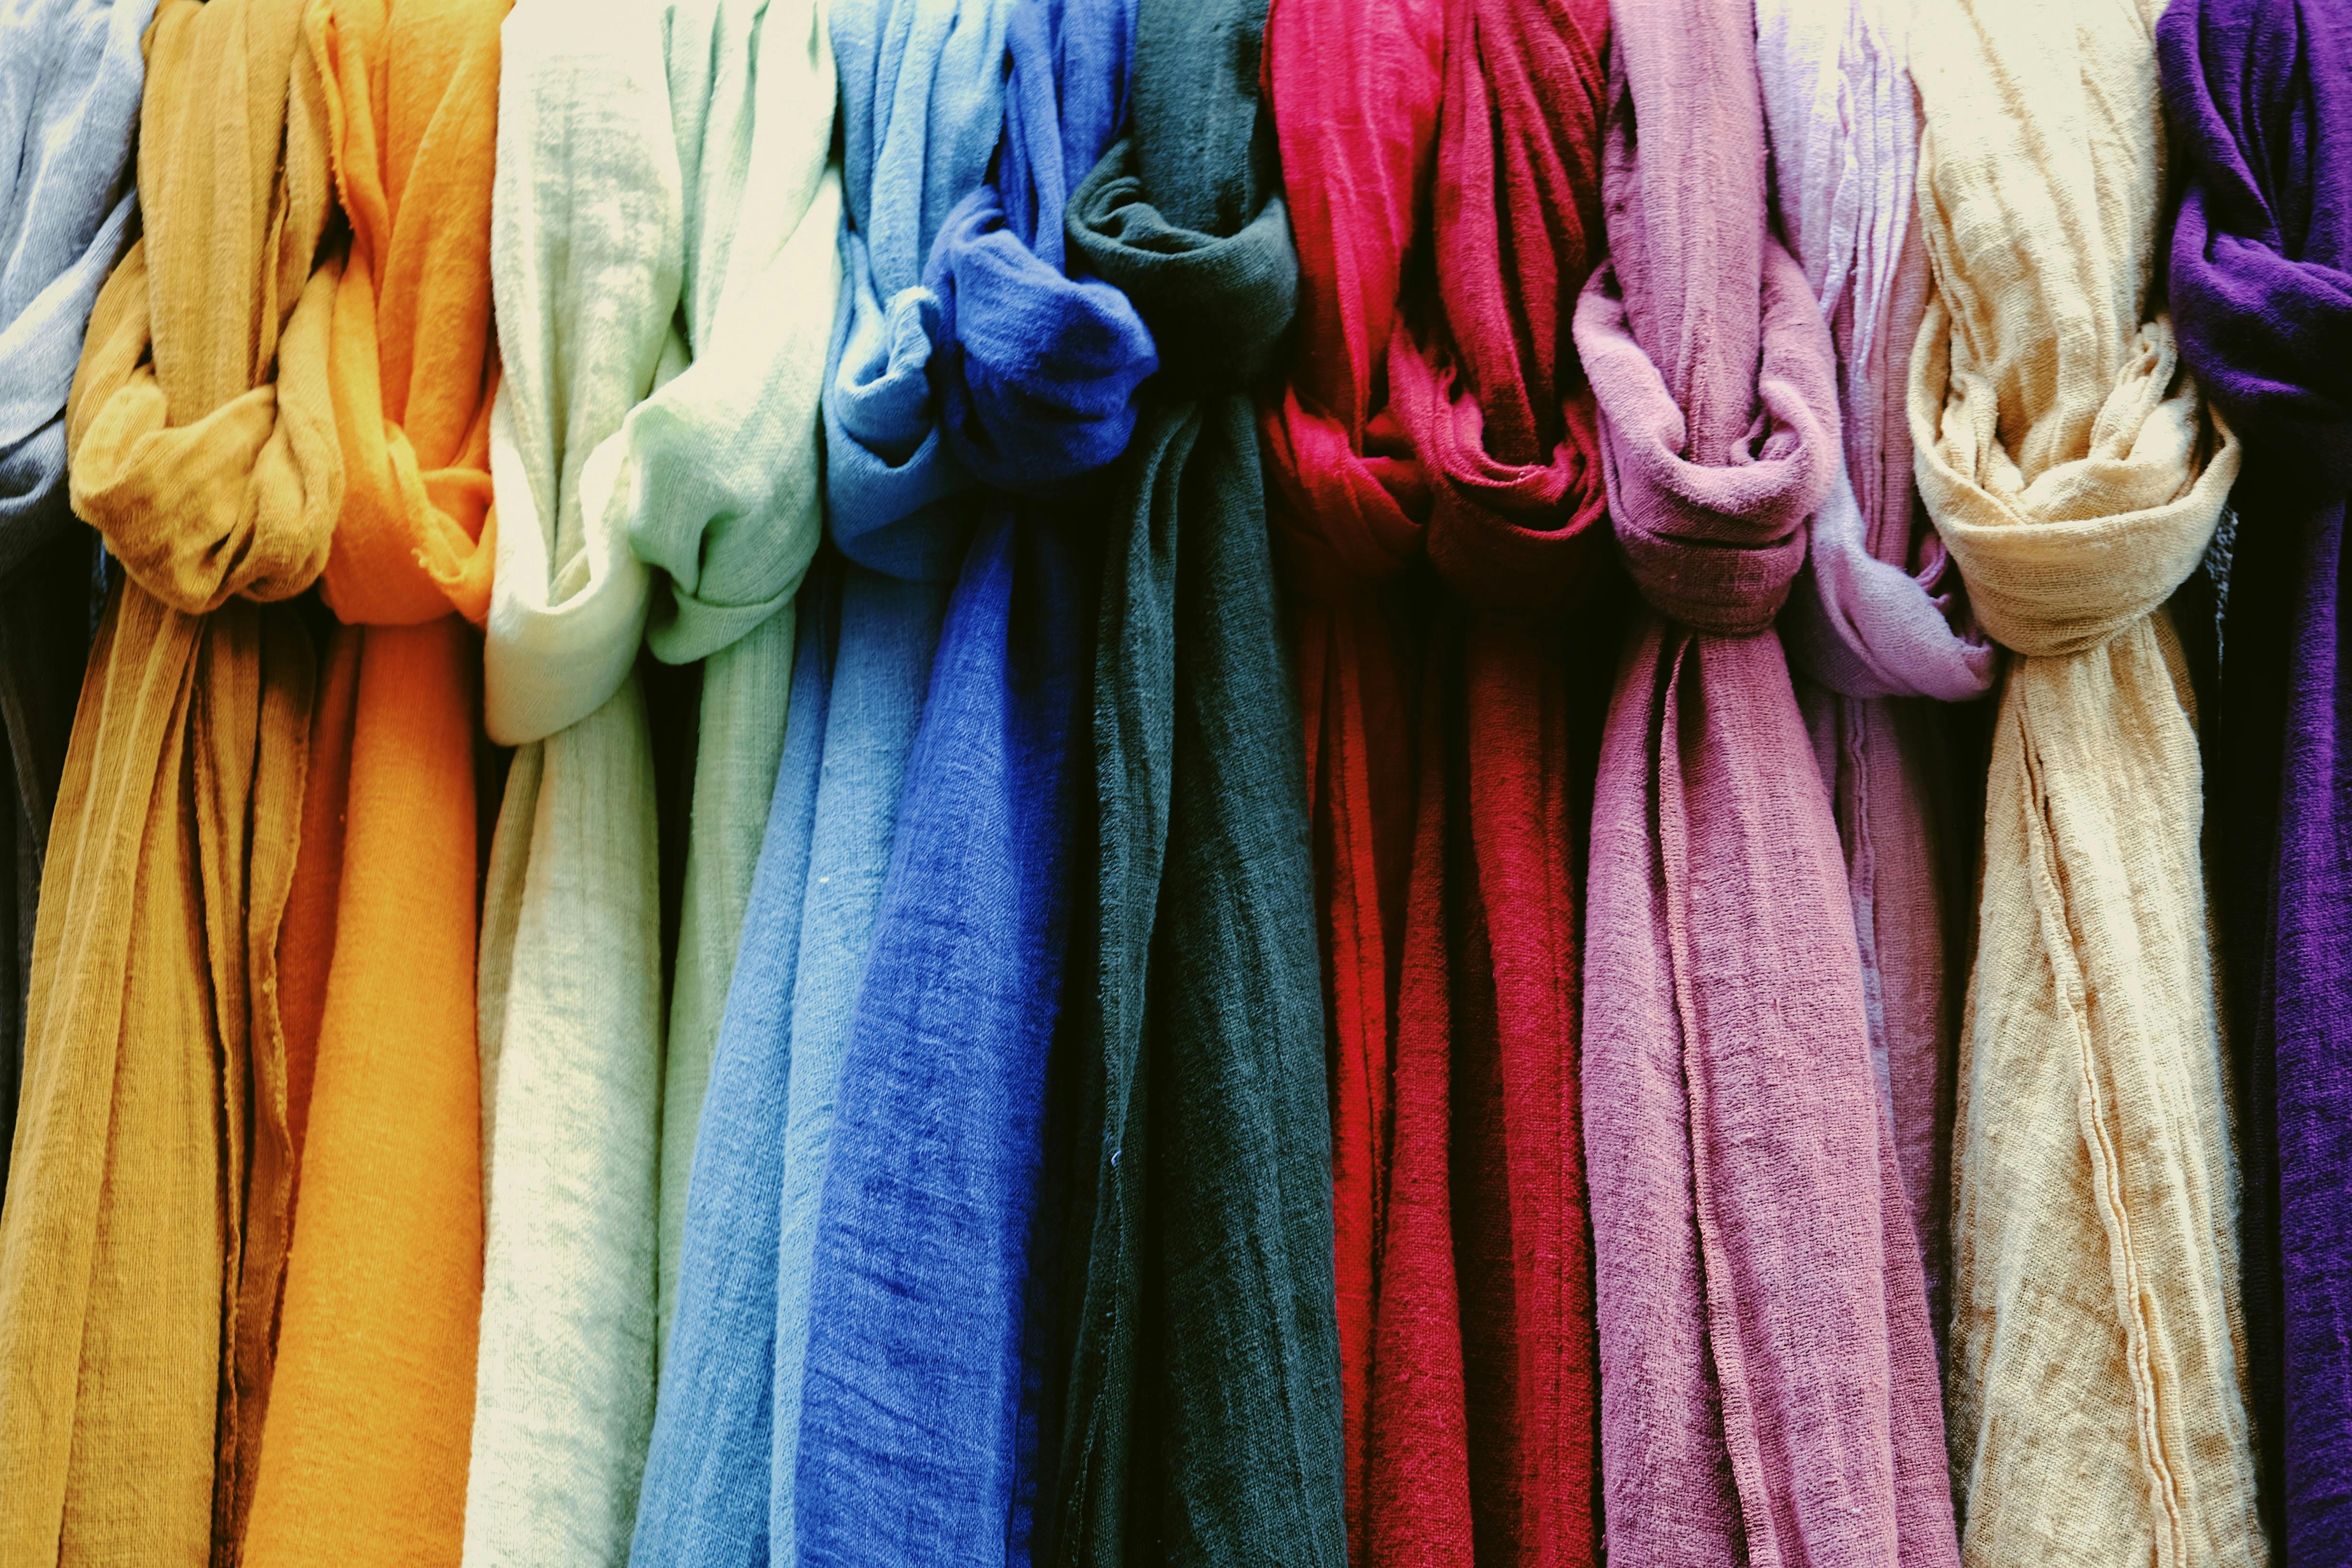 Multicolored linen fabrics for sale in shop · Free Stock Photo